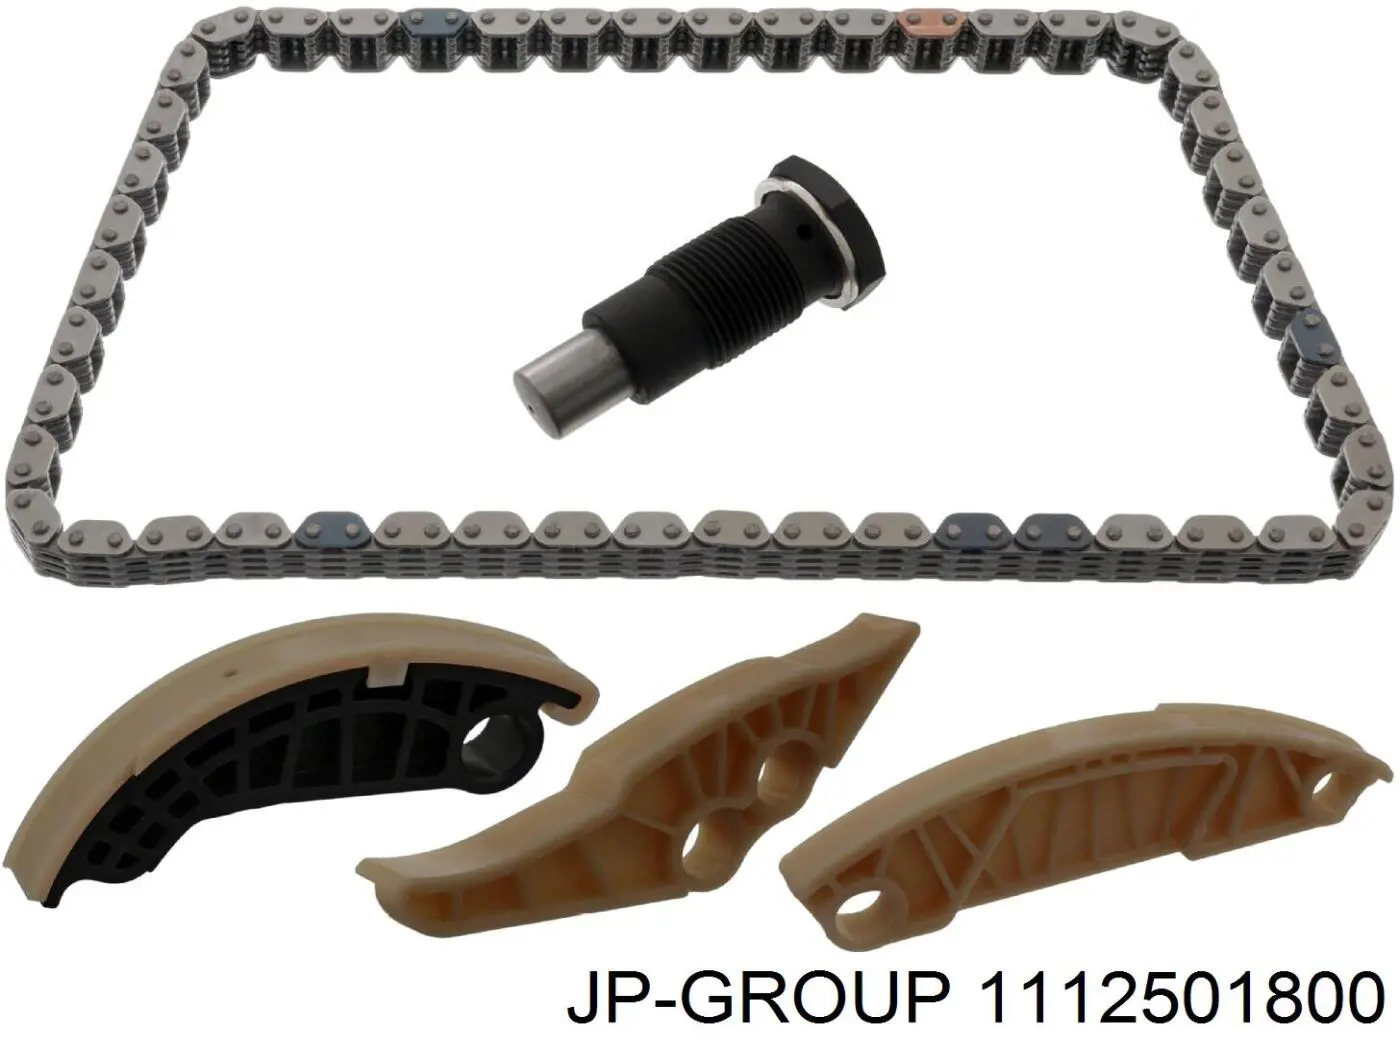 1112501800 JP Group kit de cadenas de distribución